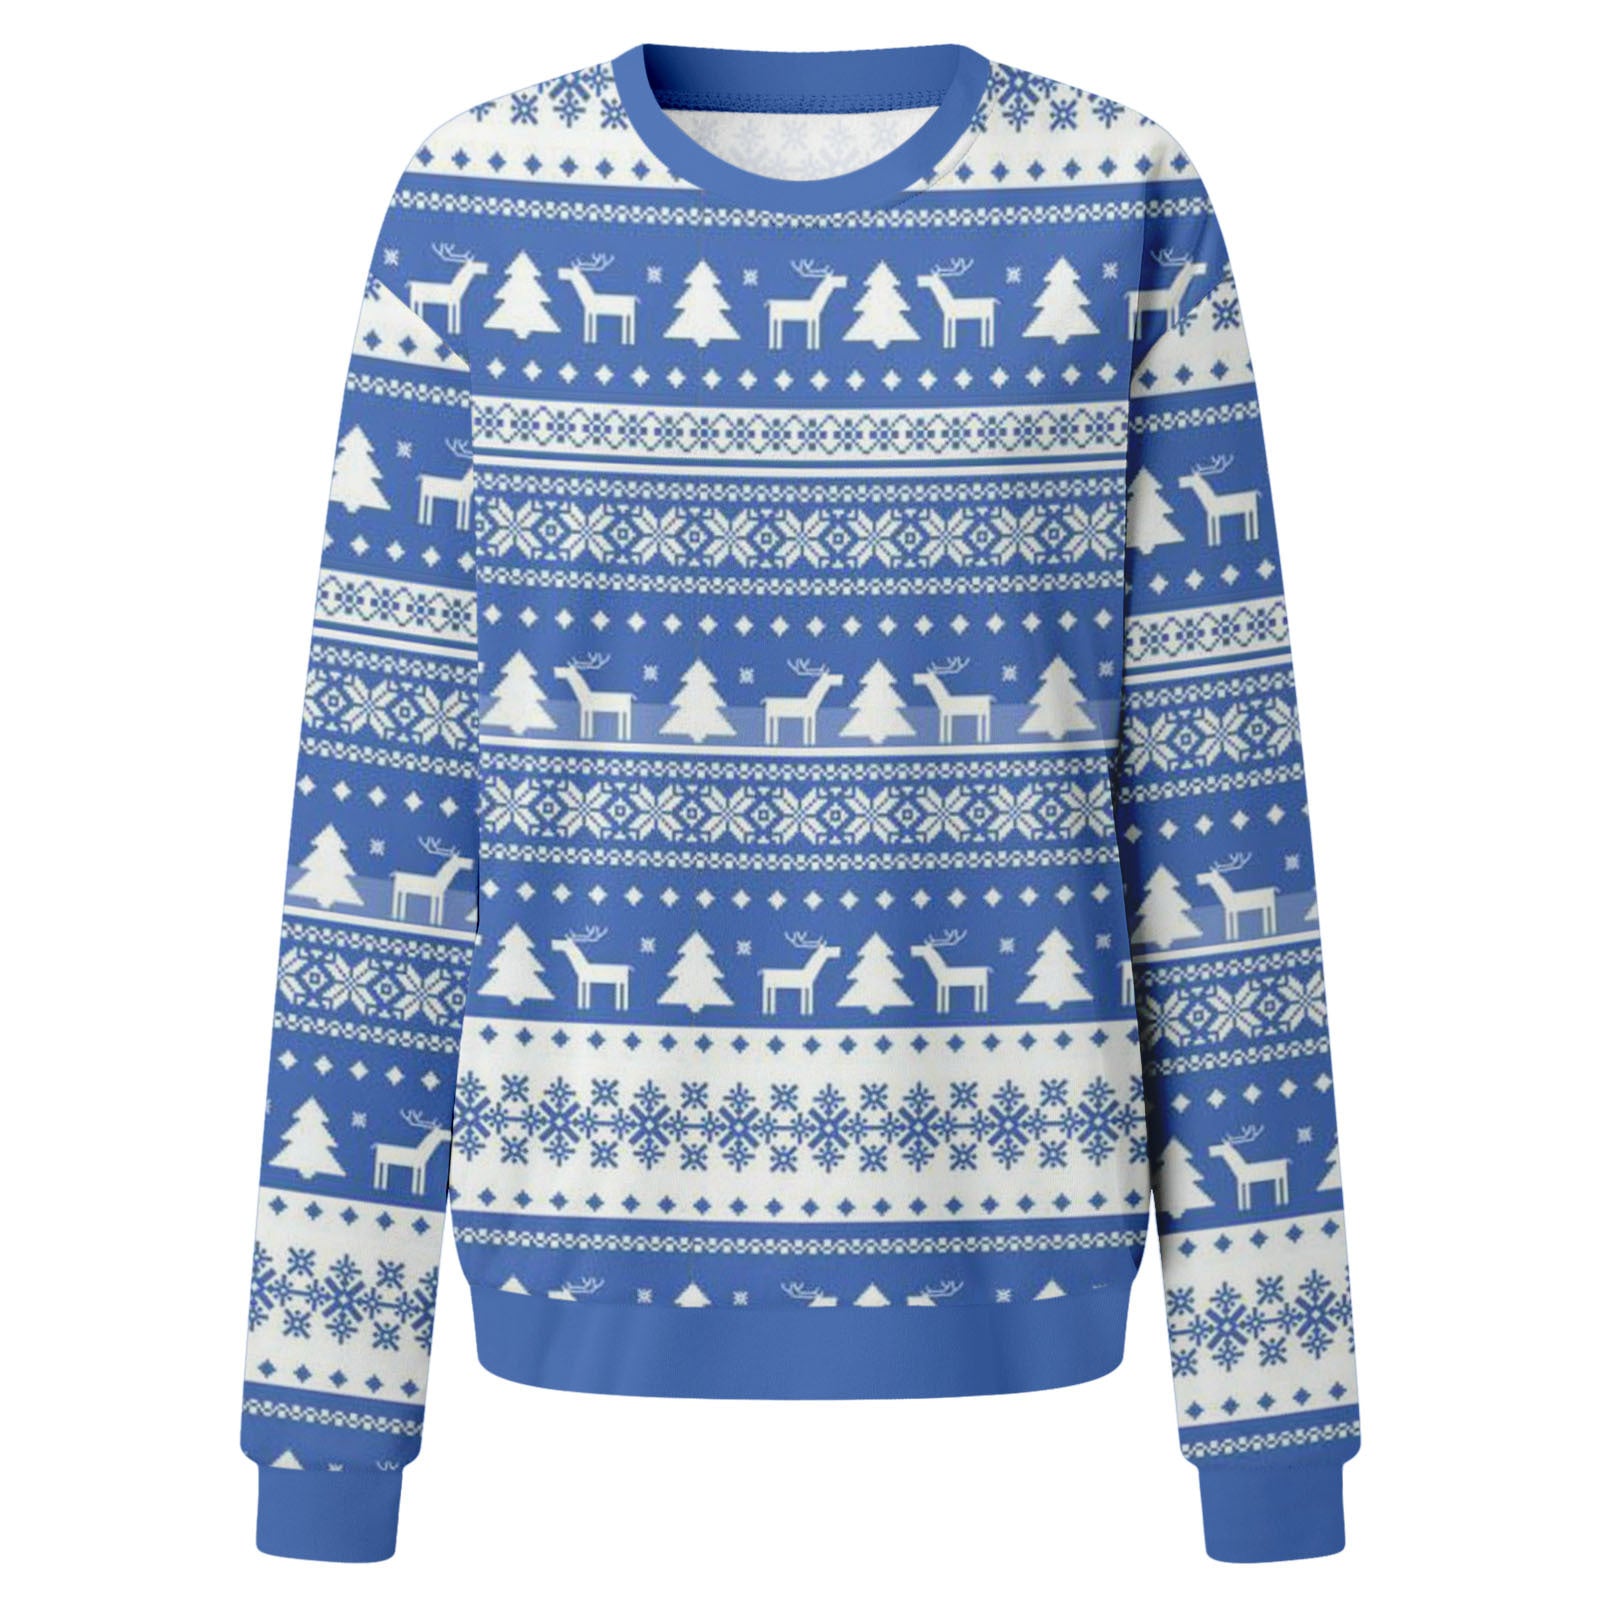 European and American style women's printed elk Christmas sweater